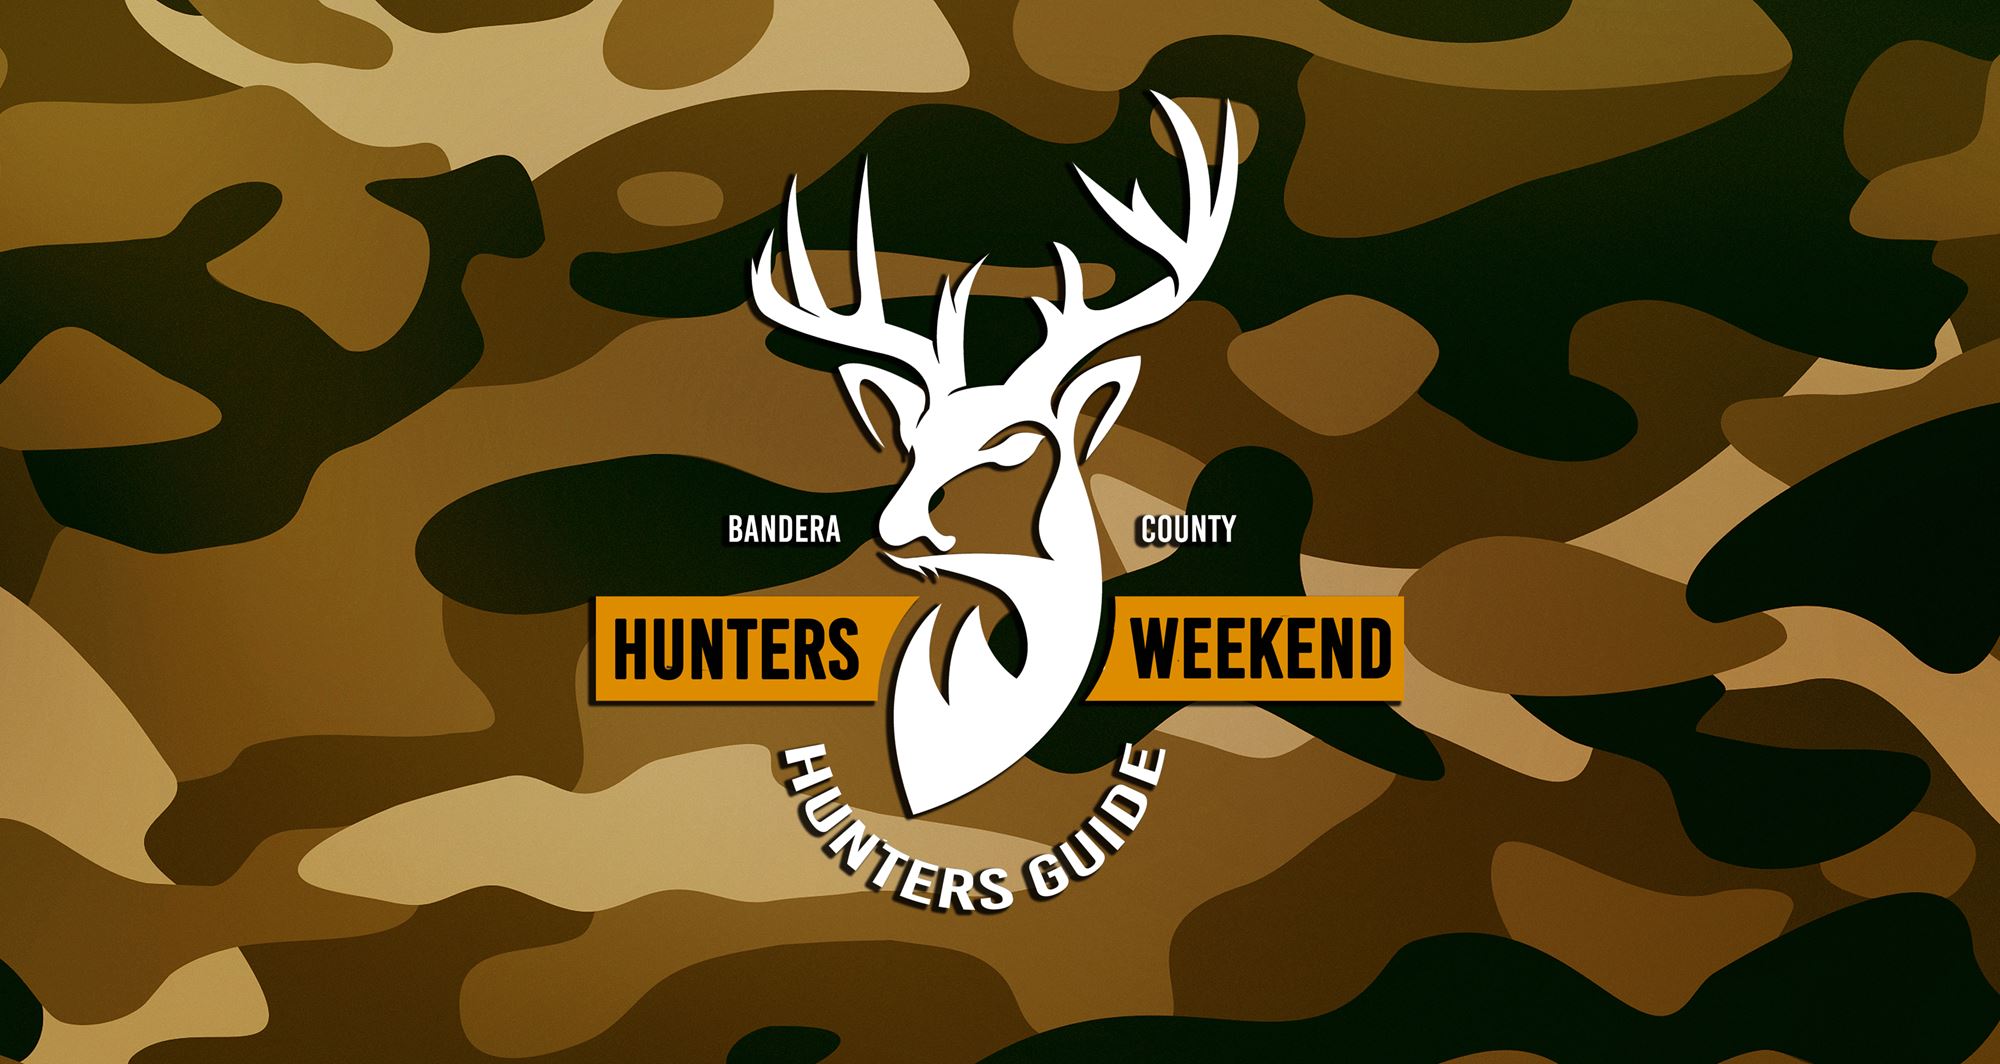 Bandera County Hunters Guide